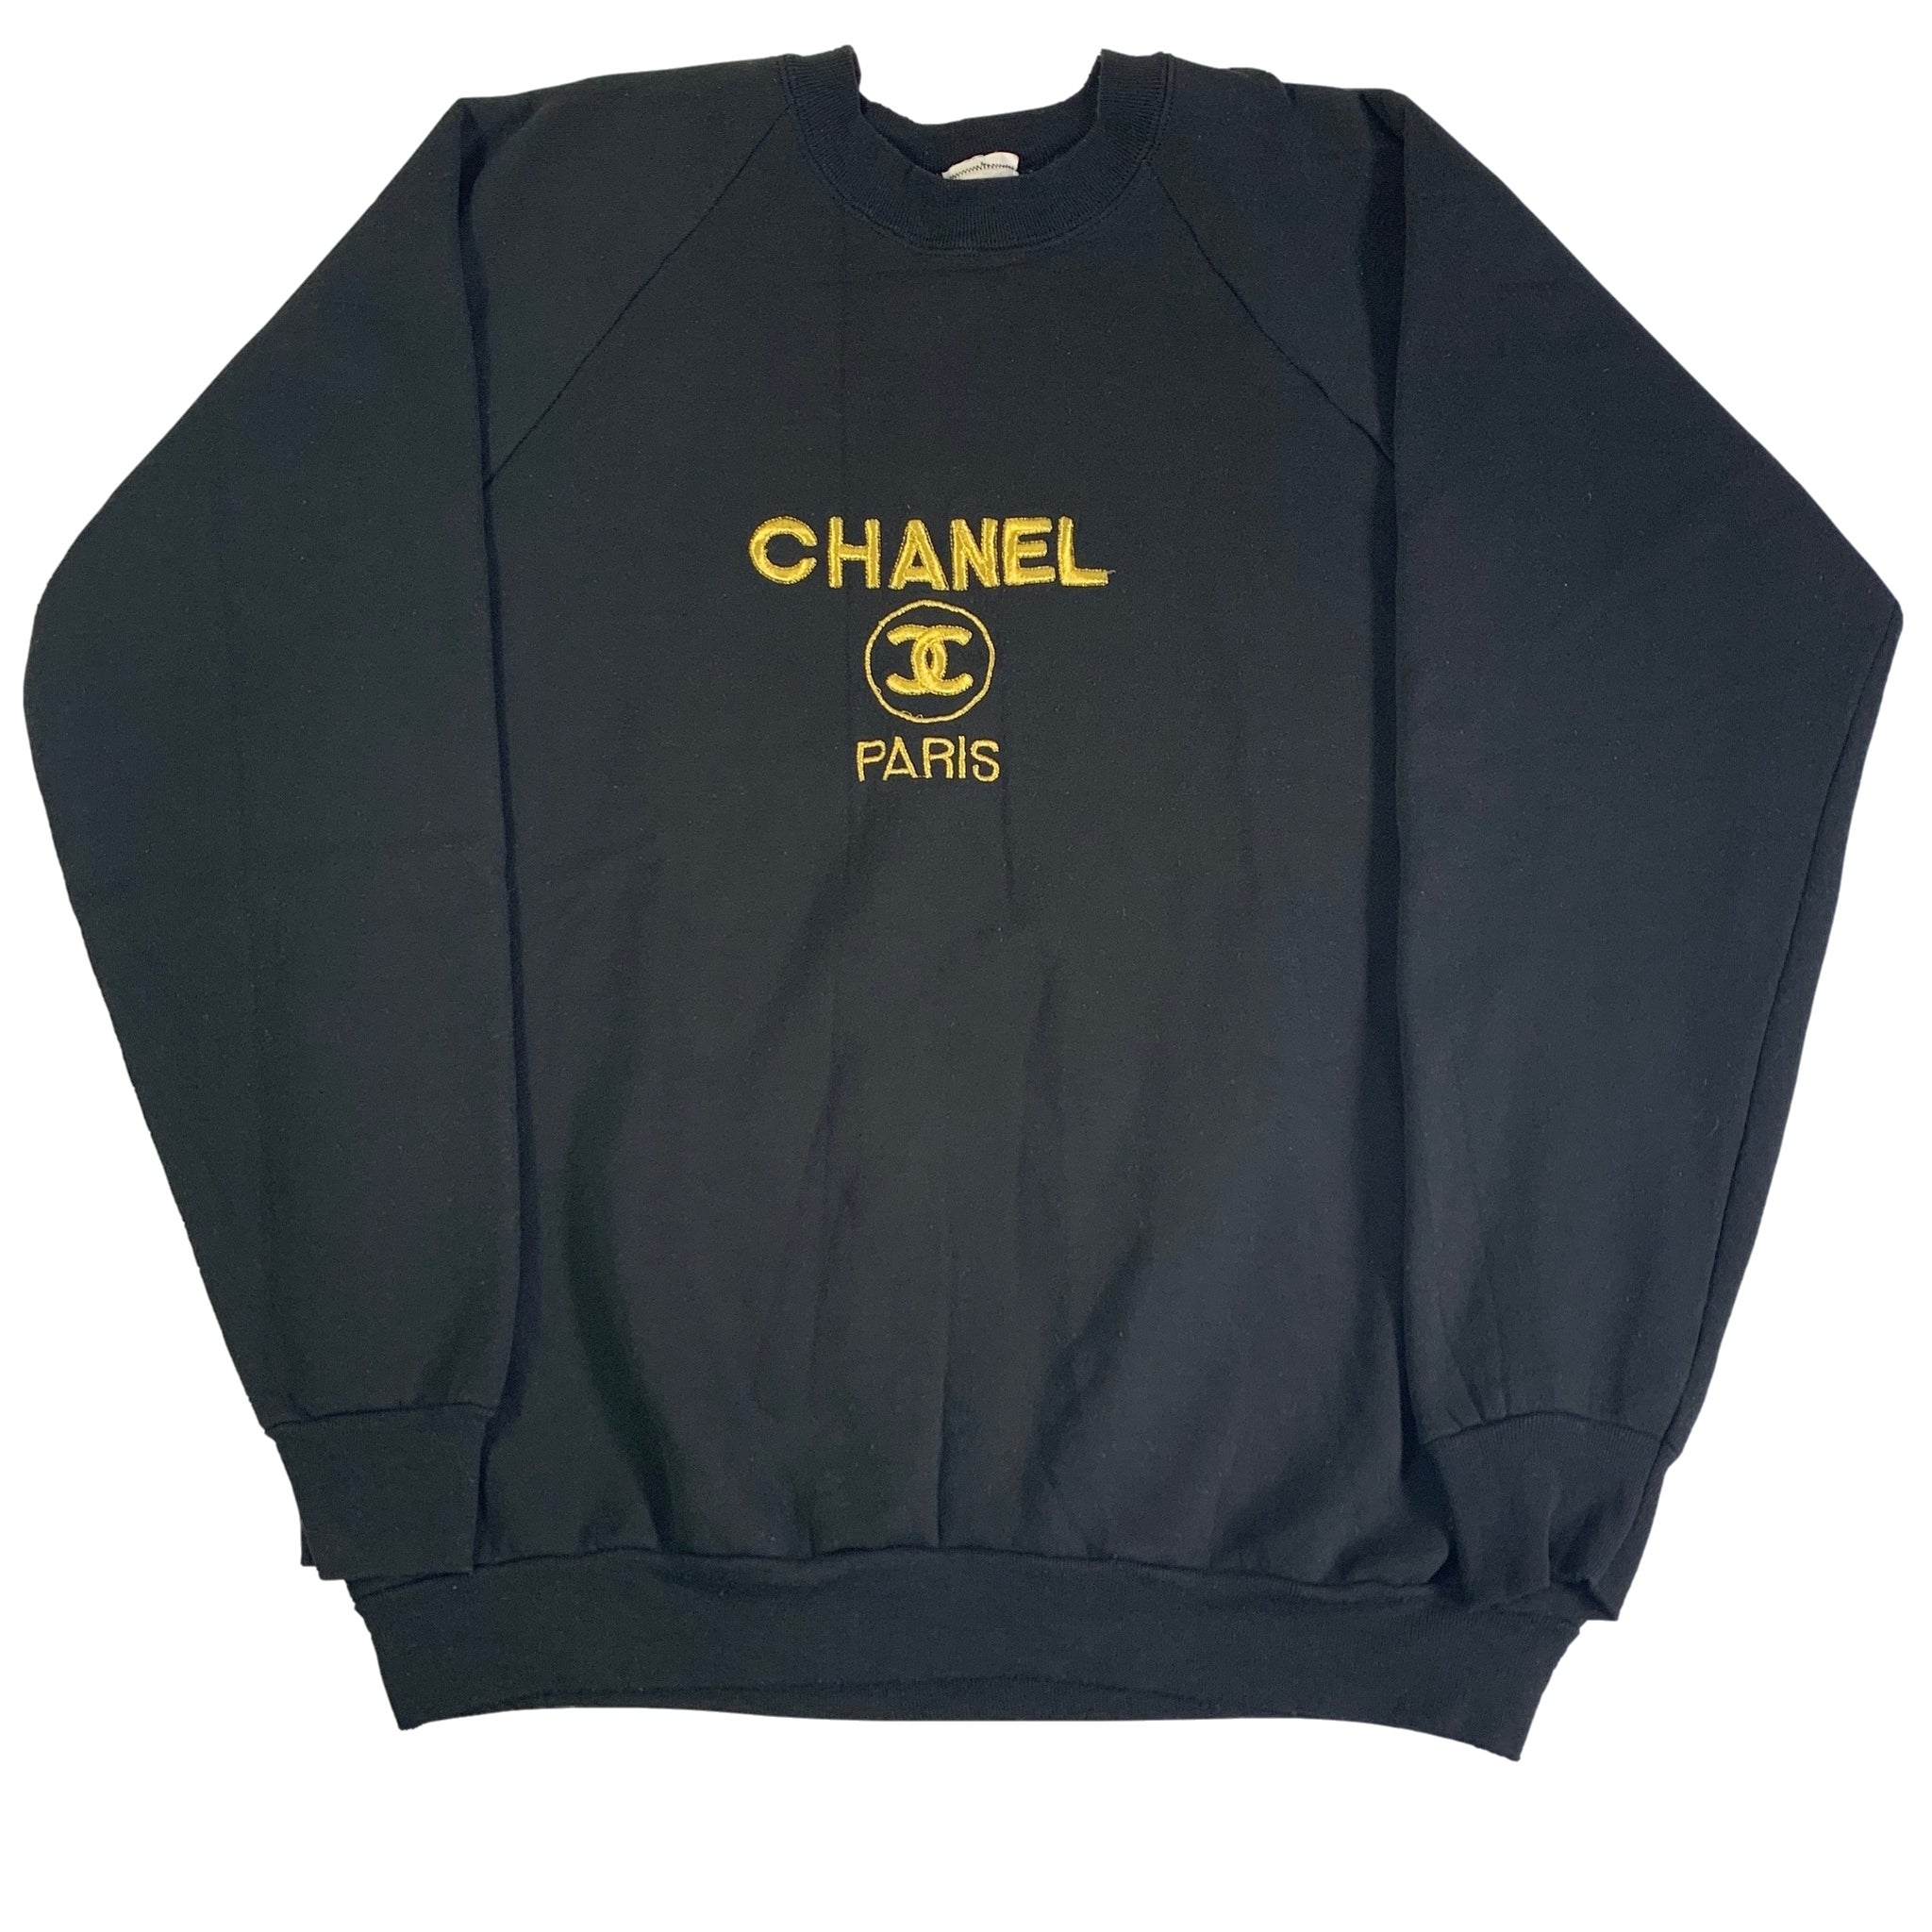 Chanel - Authenticated Paris-Biarritz Handbag - Cloth Gold Plain for Women, Very Good Condition